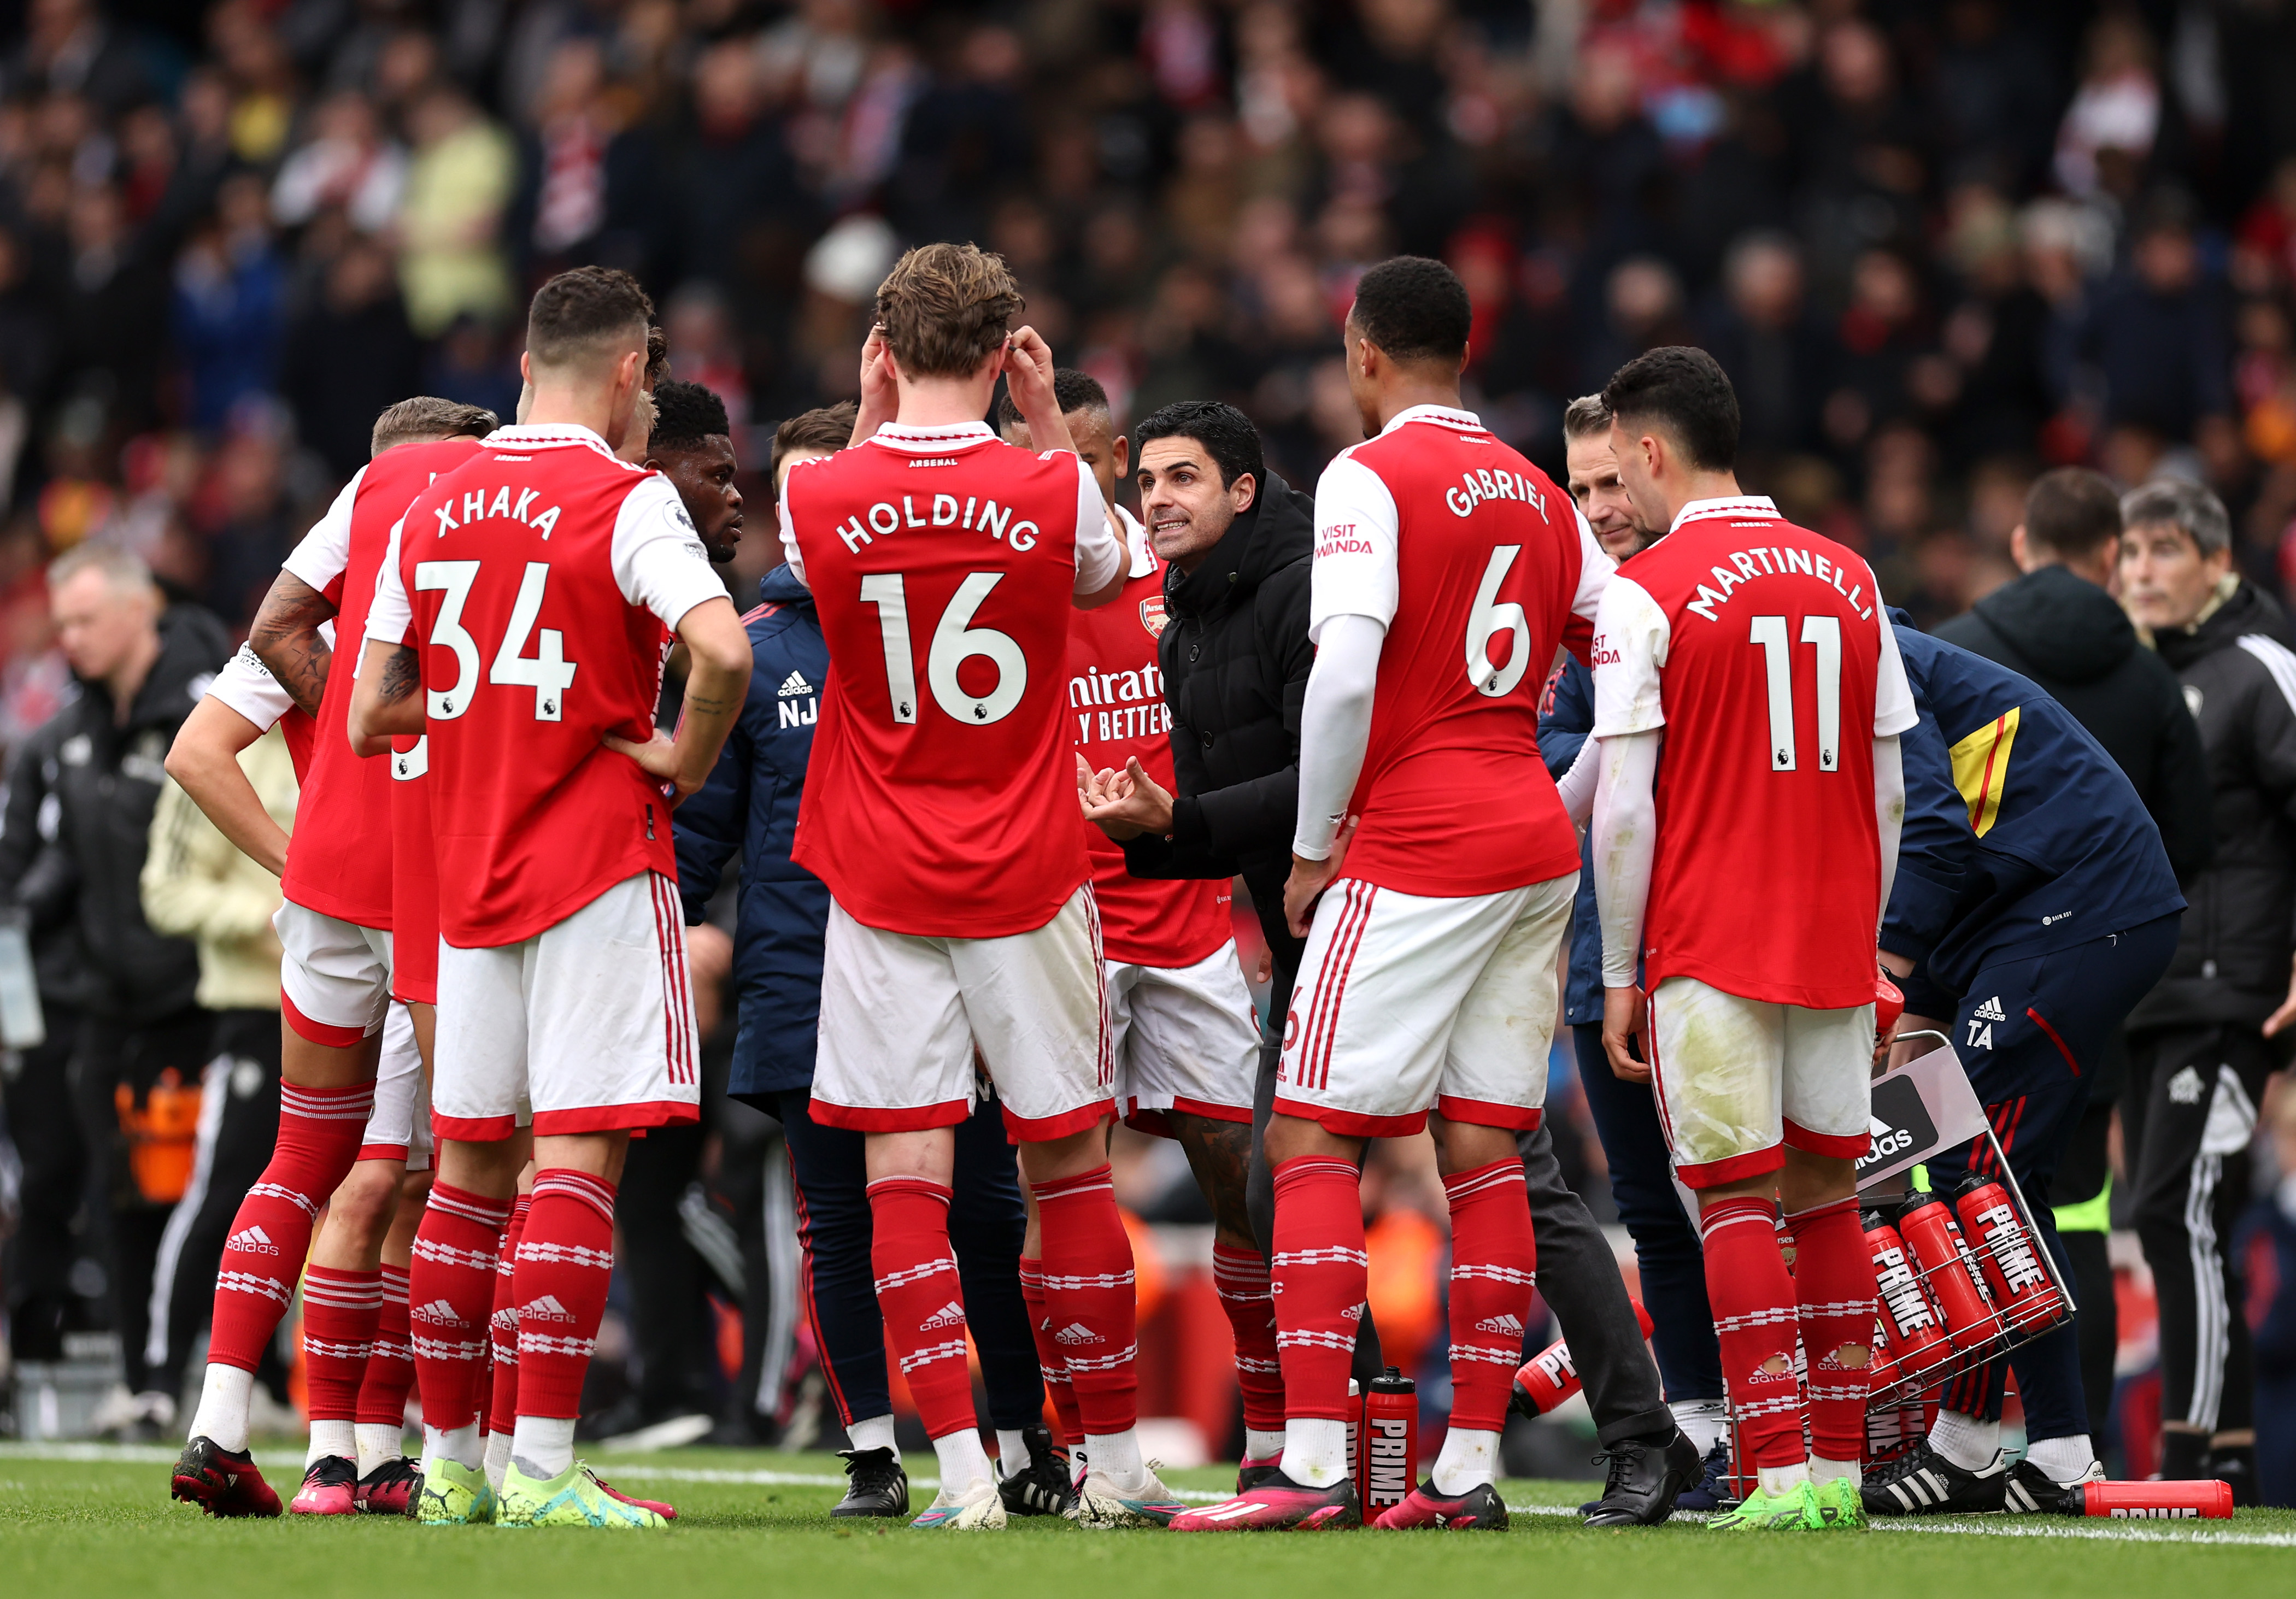 Mikel Arteta gives his team instructions - Arsenal FC - Premier League